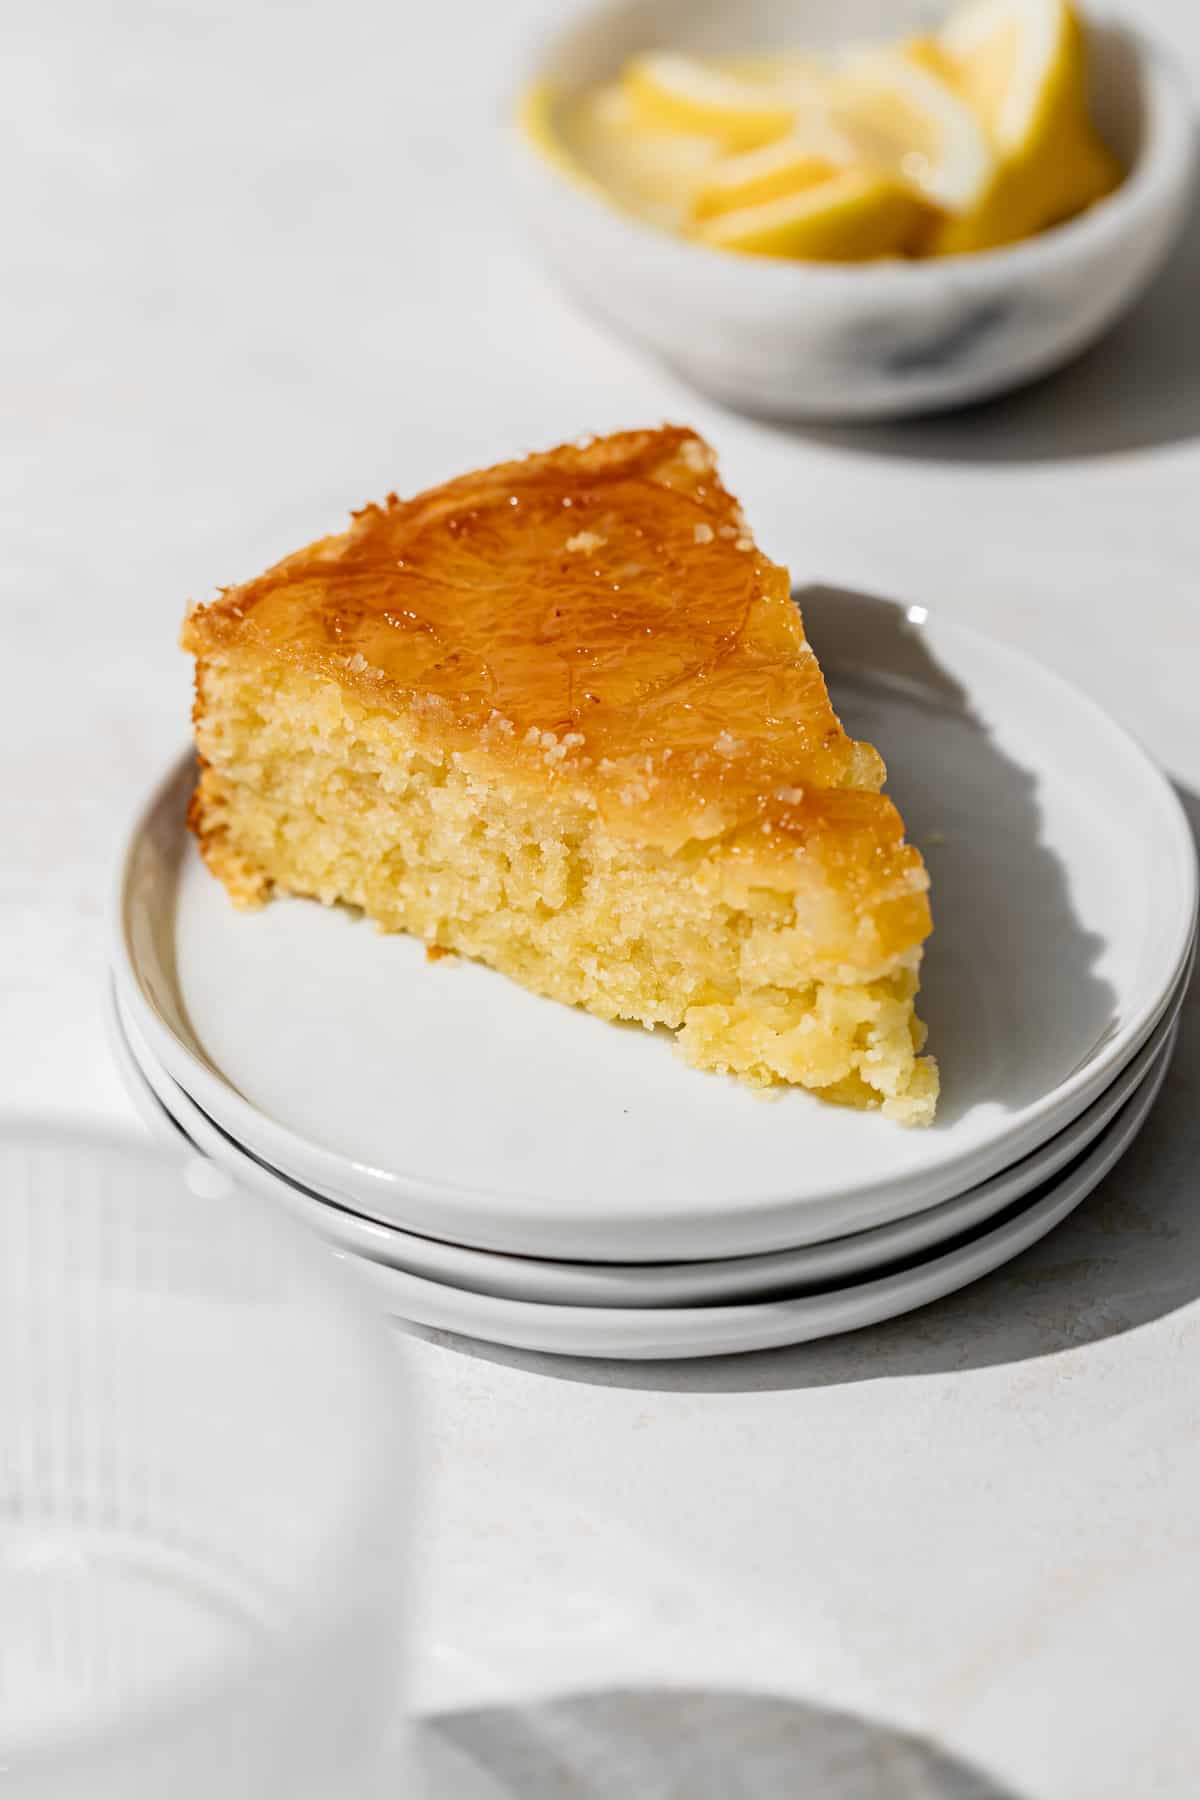 slice of lemon upside down cake on plate.